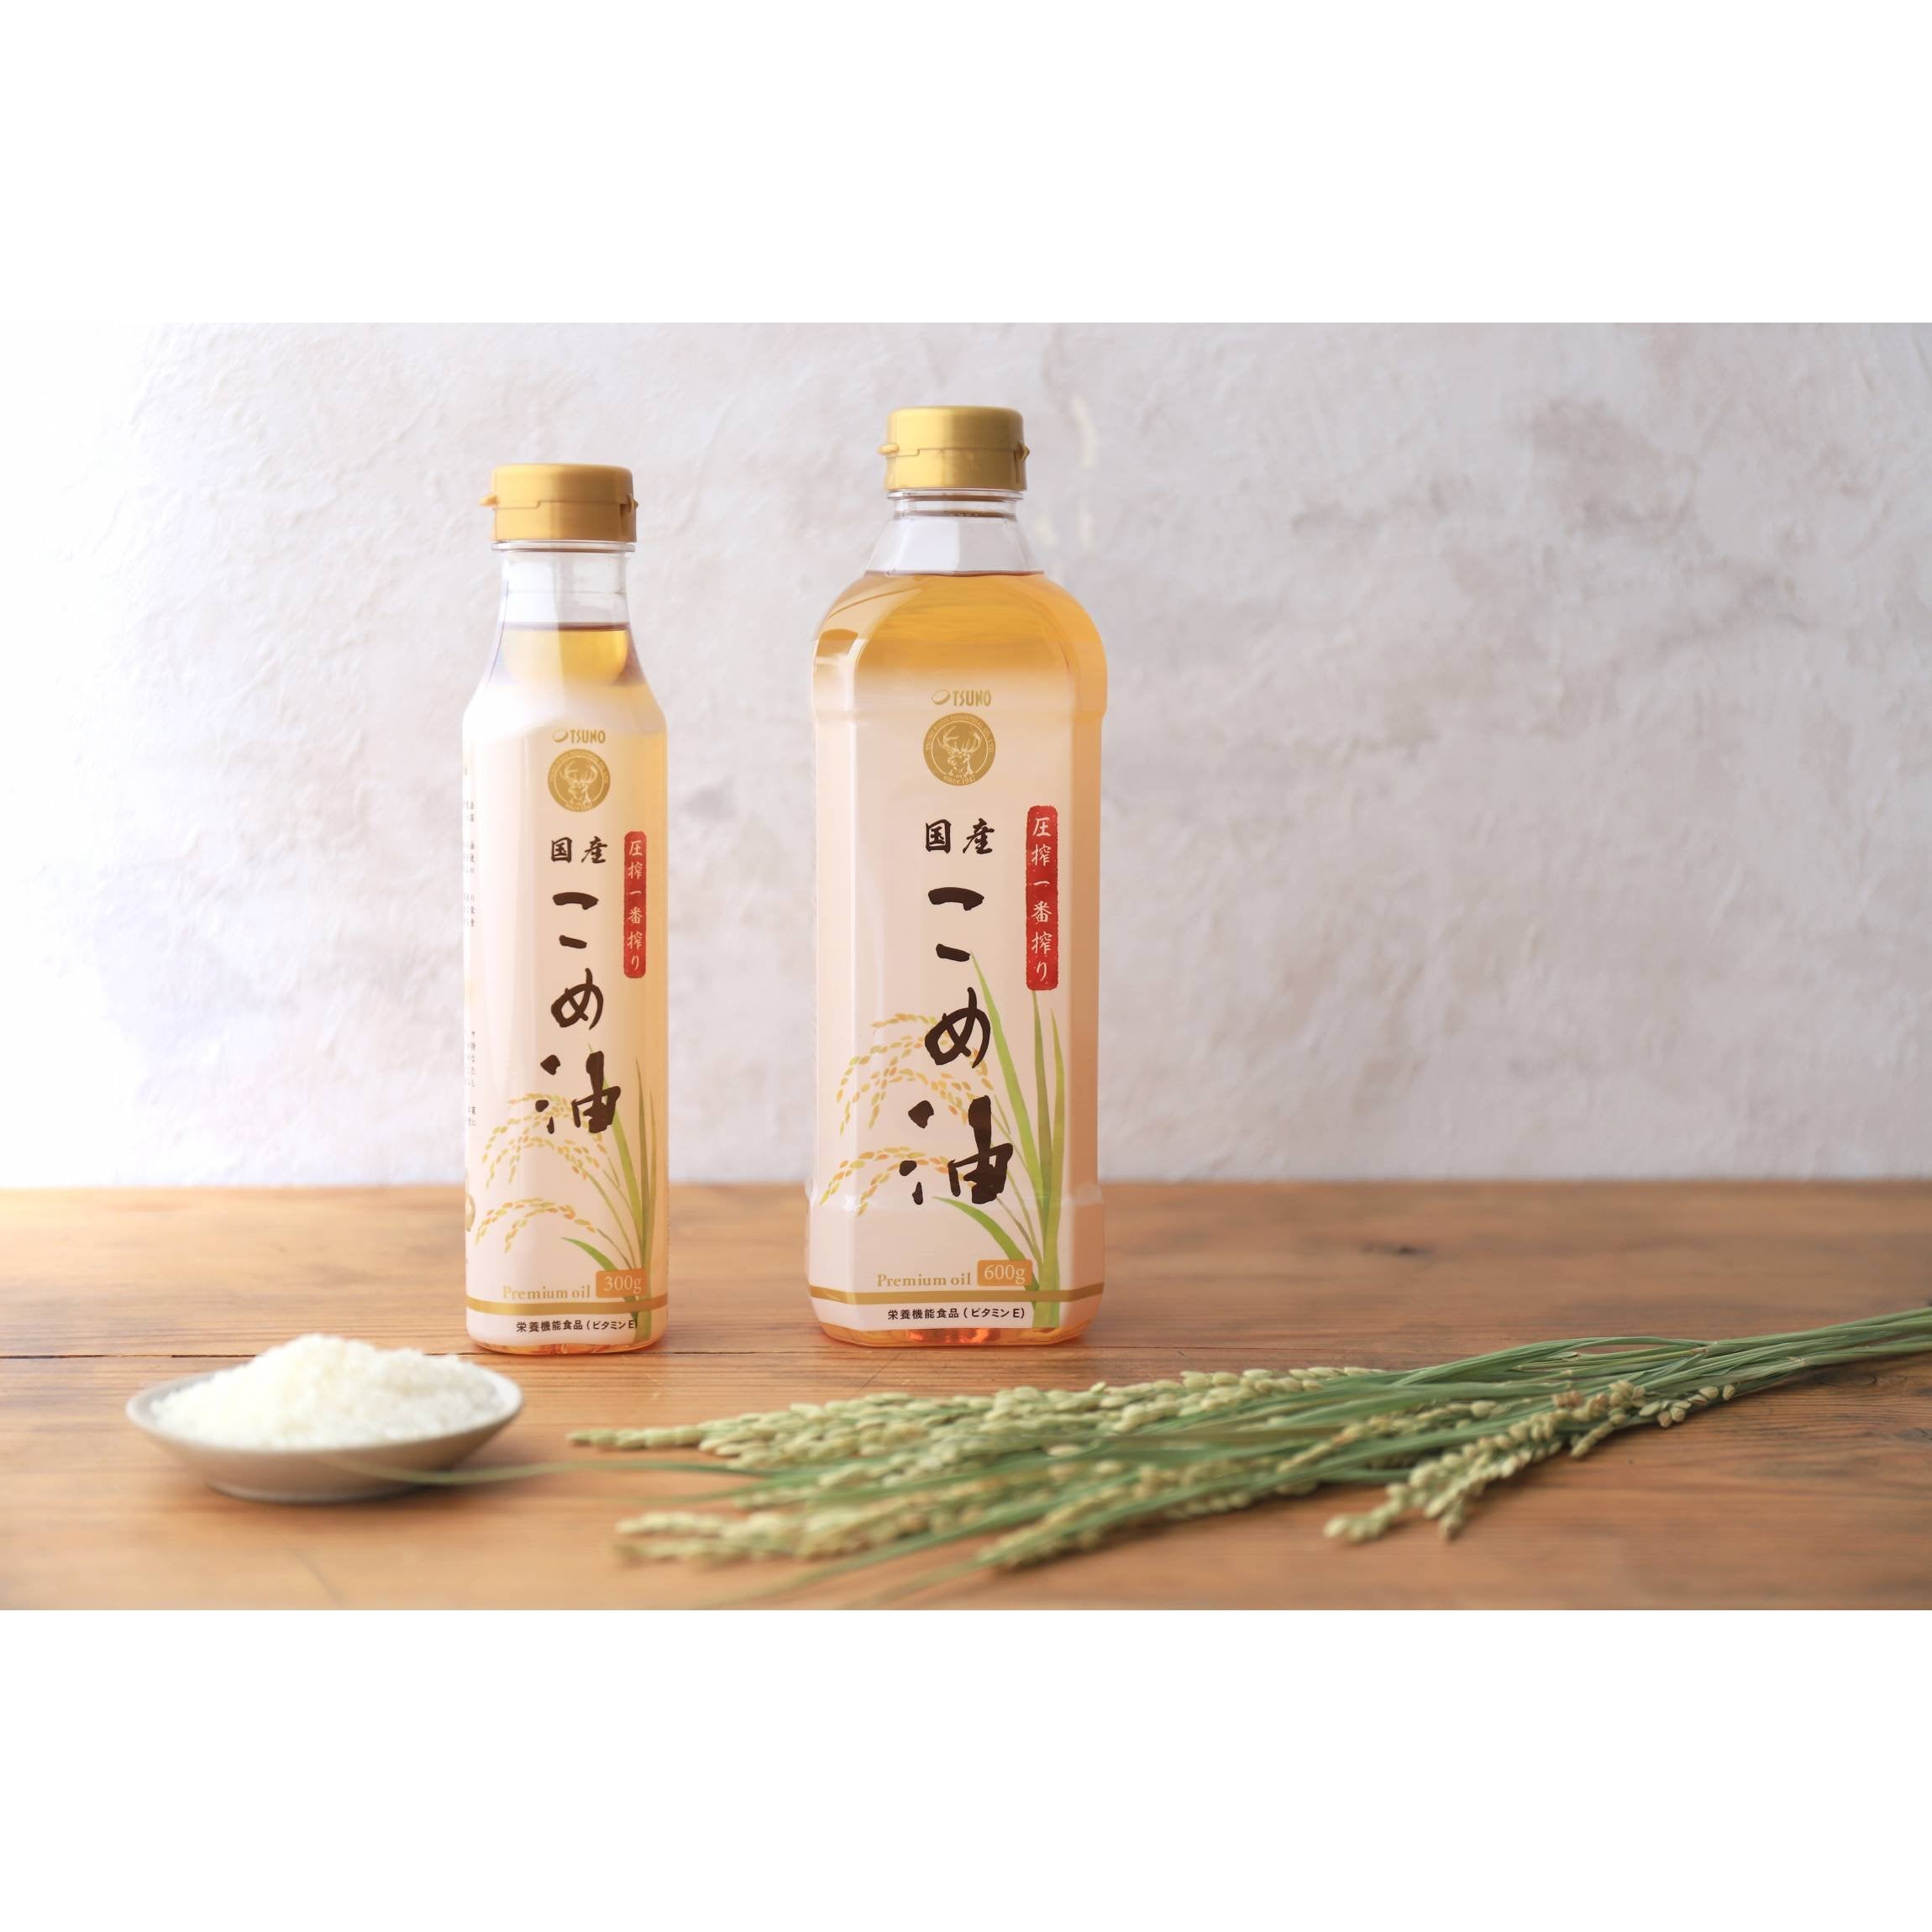 Tsuno Japanese Rice Bran Oil Ichiban Shibori First Pressed Oil 300g